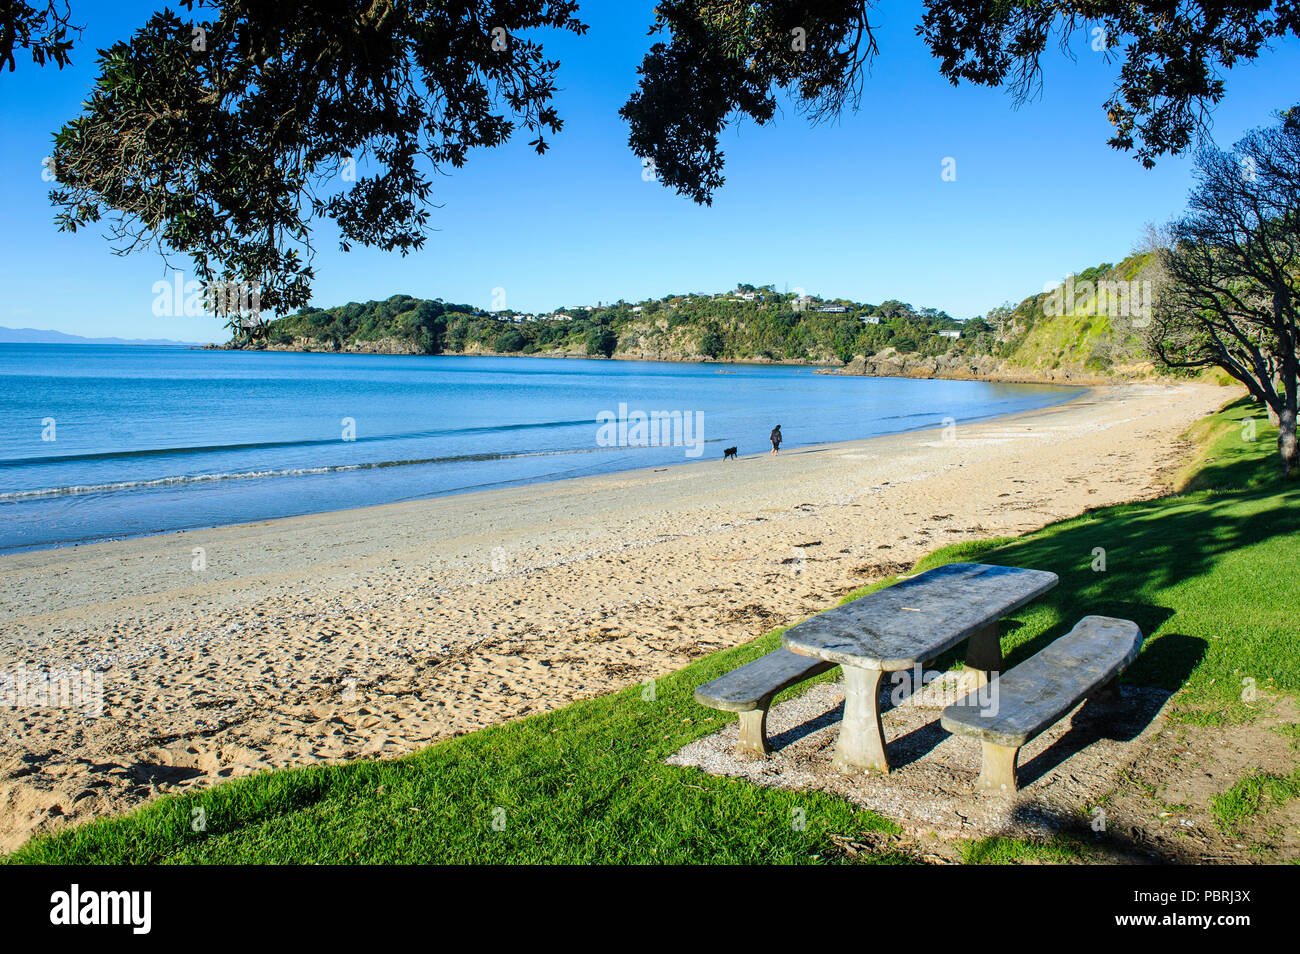 Picknick table on Oneroa beach, Waiheke island, North Island, New Zealand Stock Photo